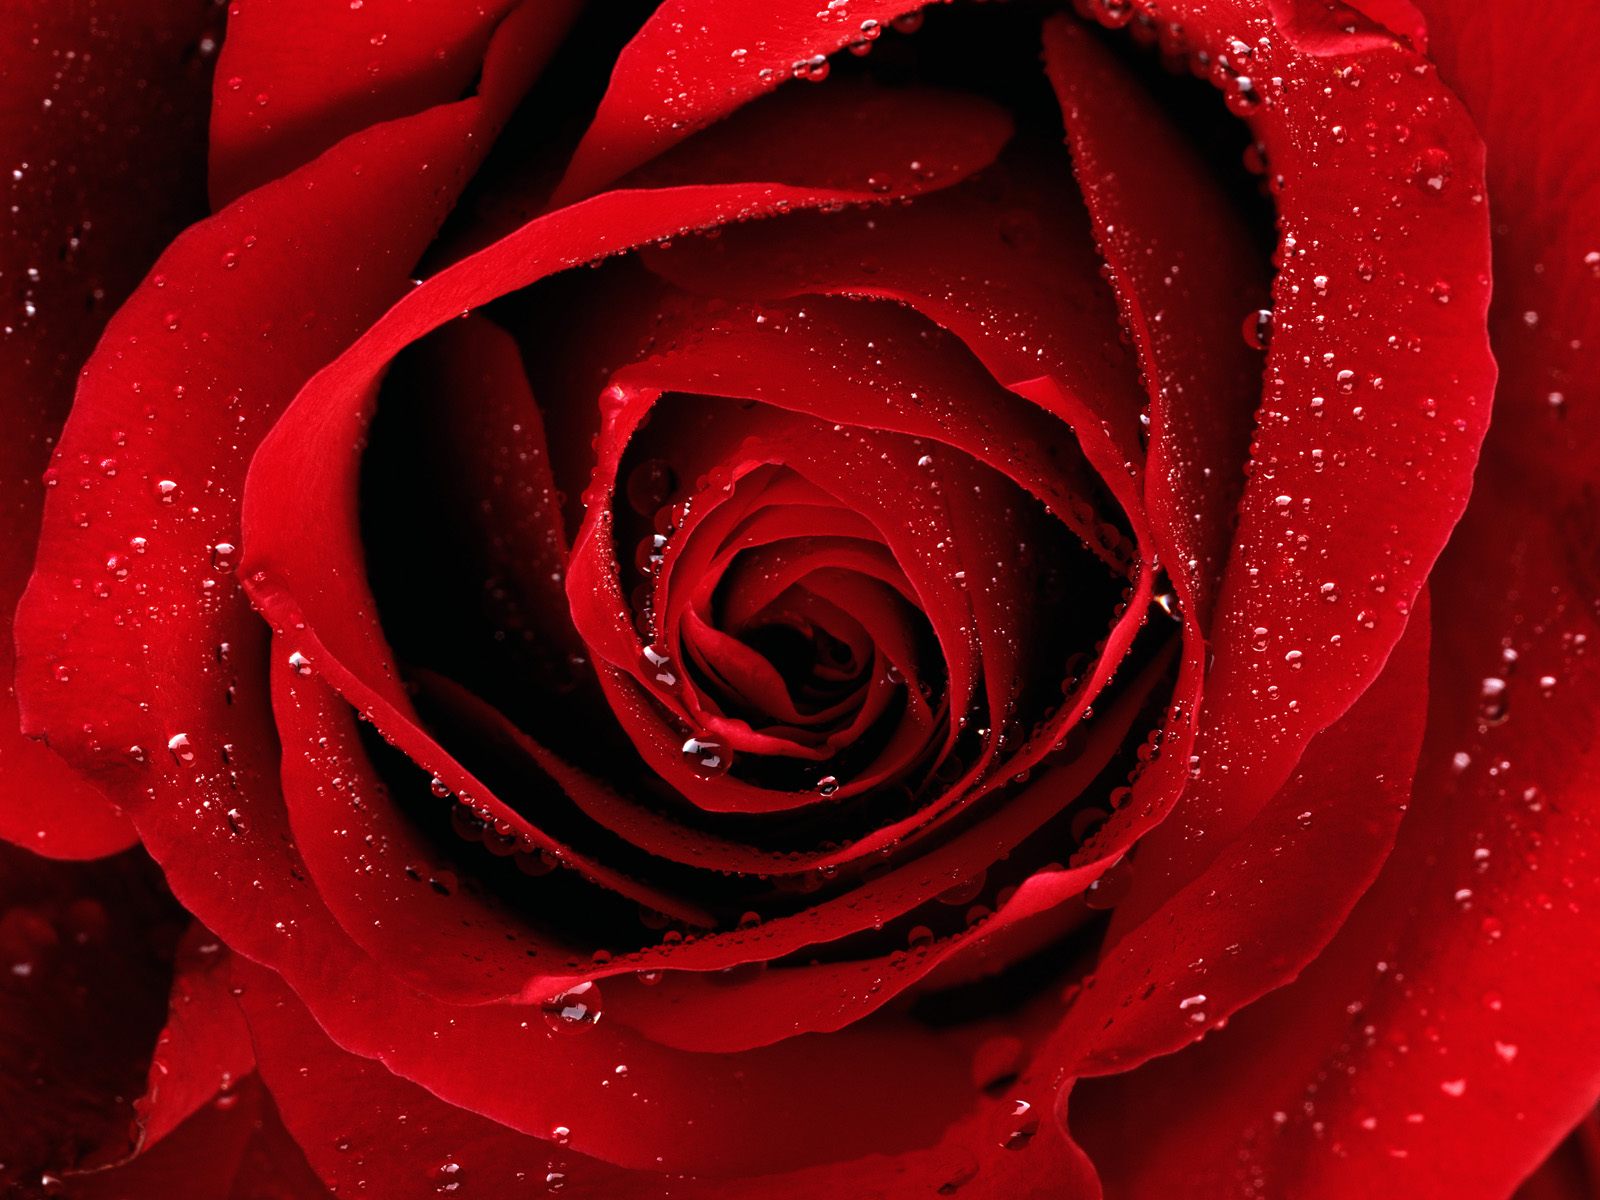  Cat Red Rose Wallpapers White Rose Wallpaper for Desktop Backgrounds 1600x1200